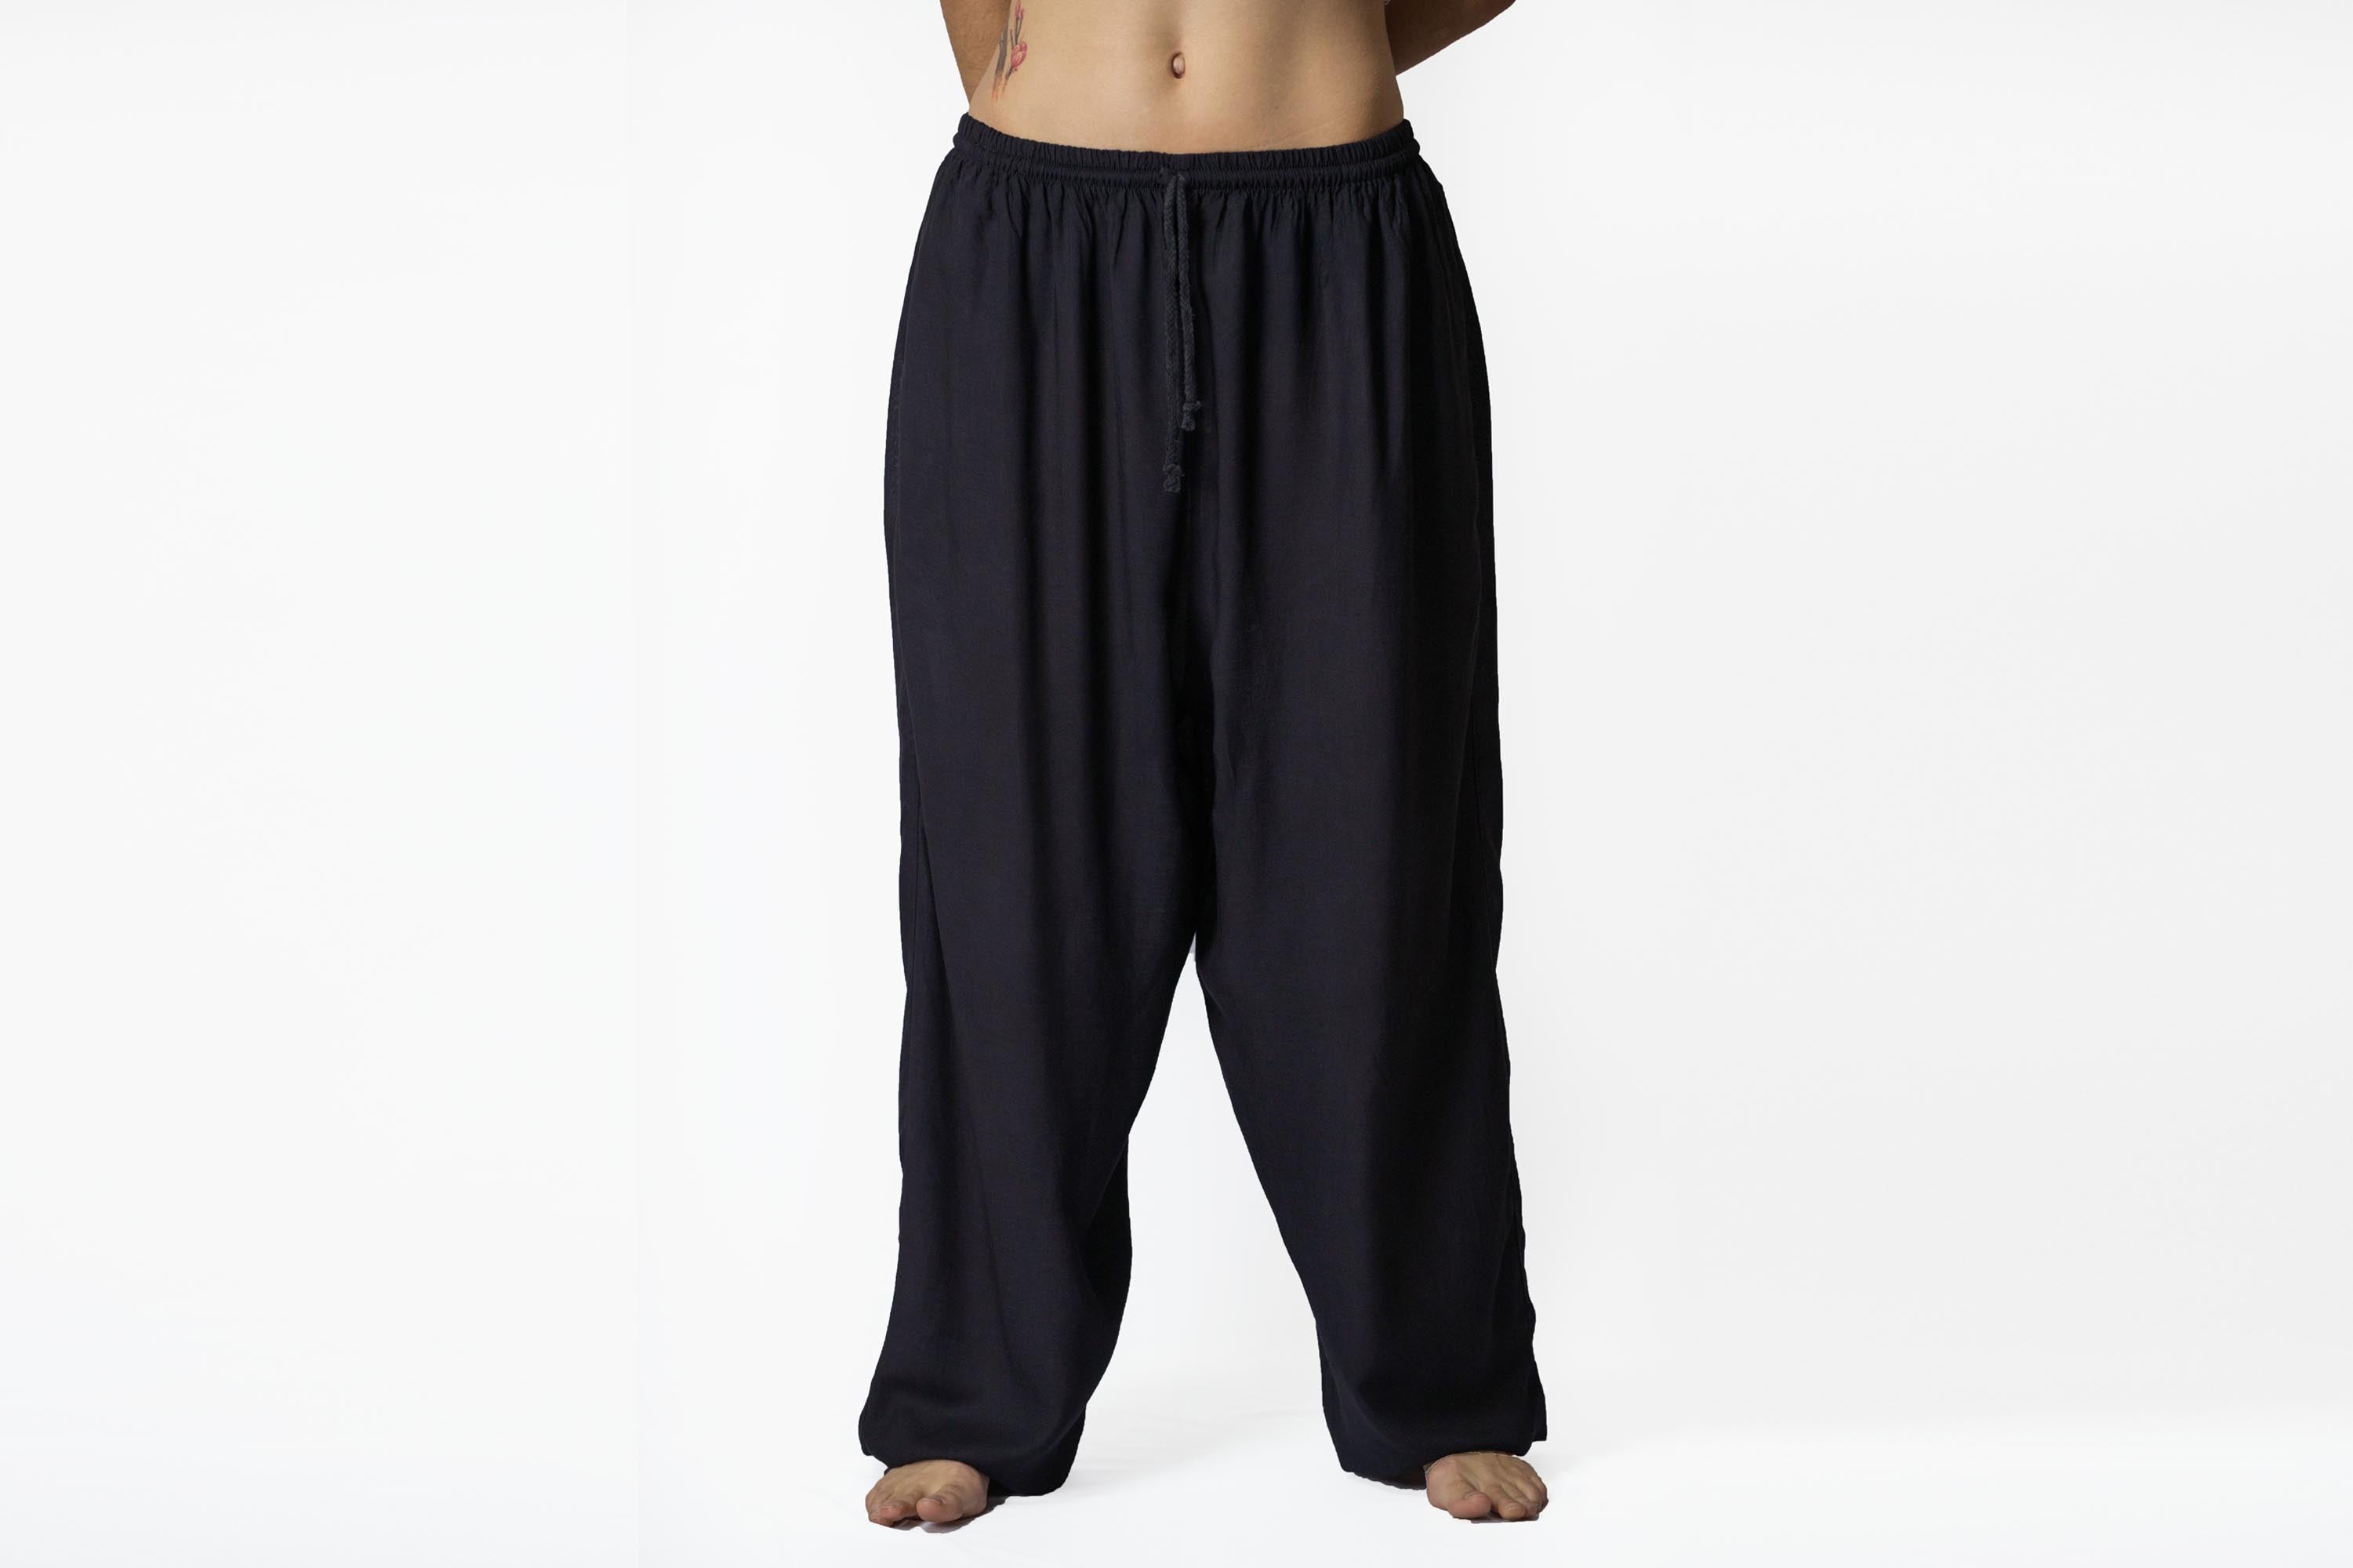 Zengjo Women's Yoga Pants (Black/Hot Pink,S) at  Women's Clothing  store